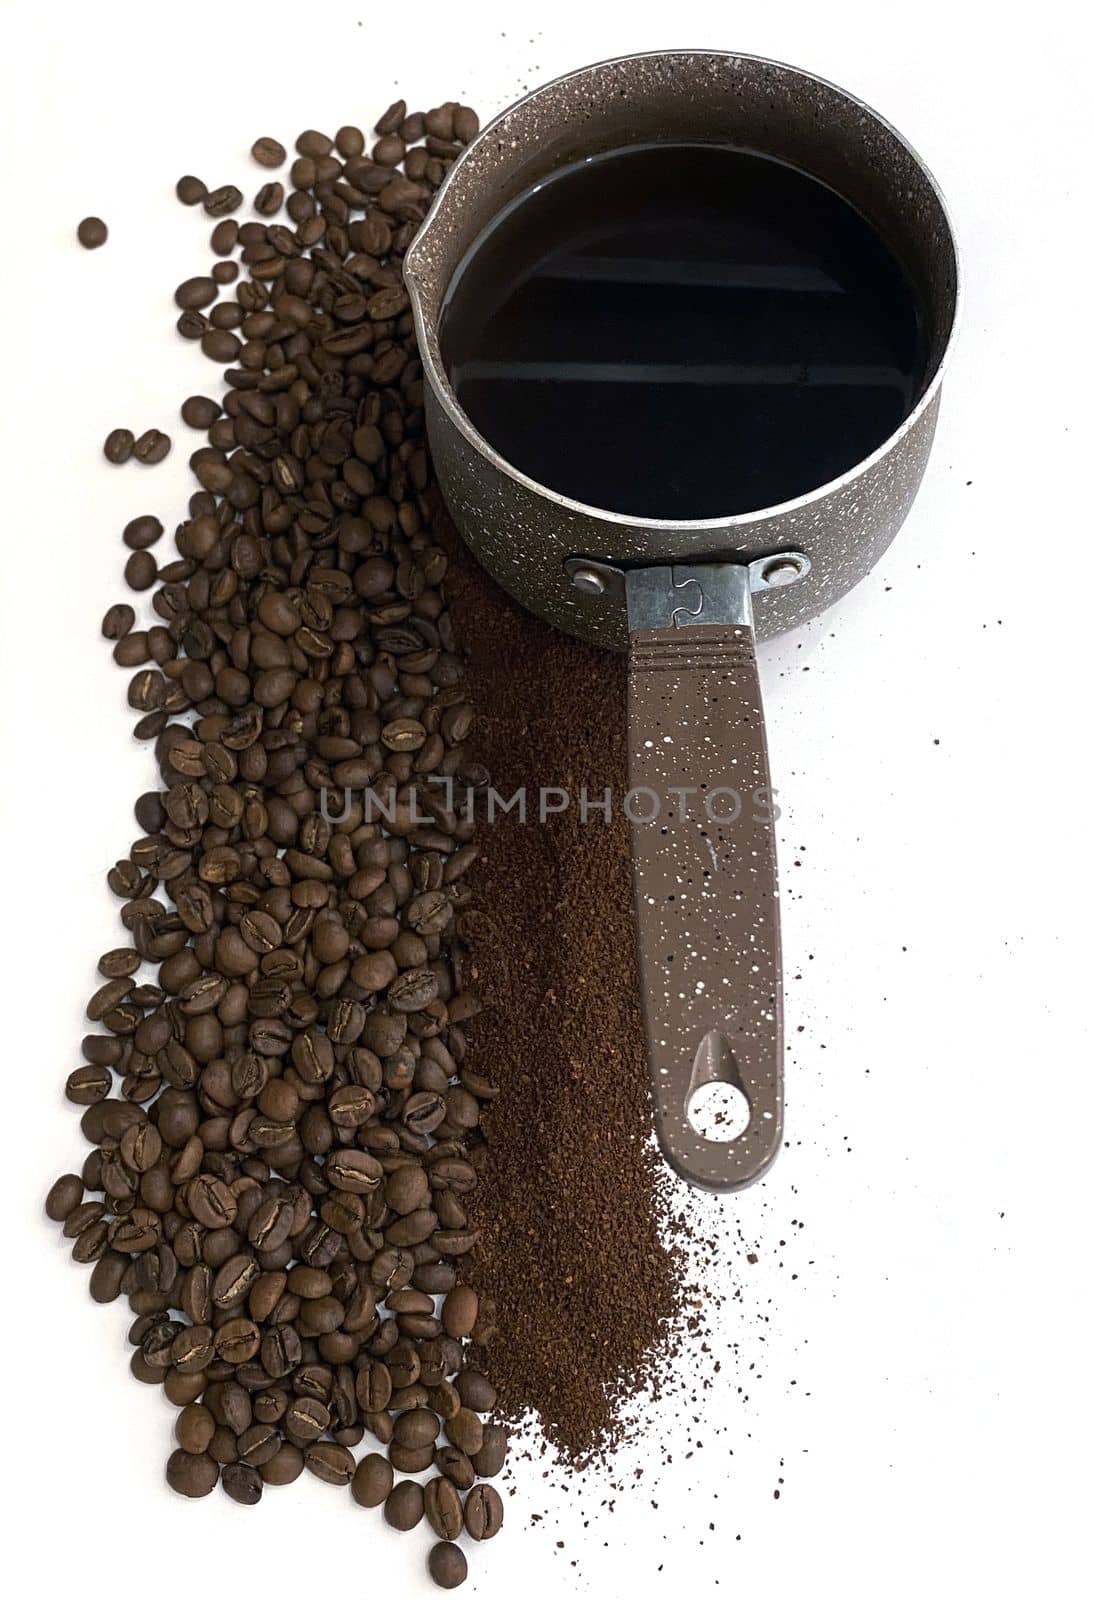 Coffee beans, ground coffee and coffee cezve.